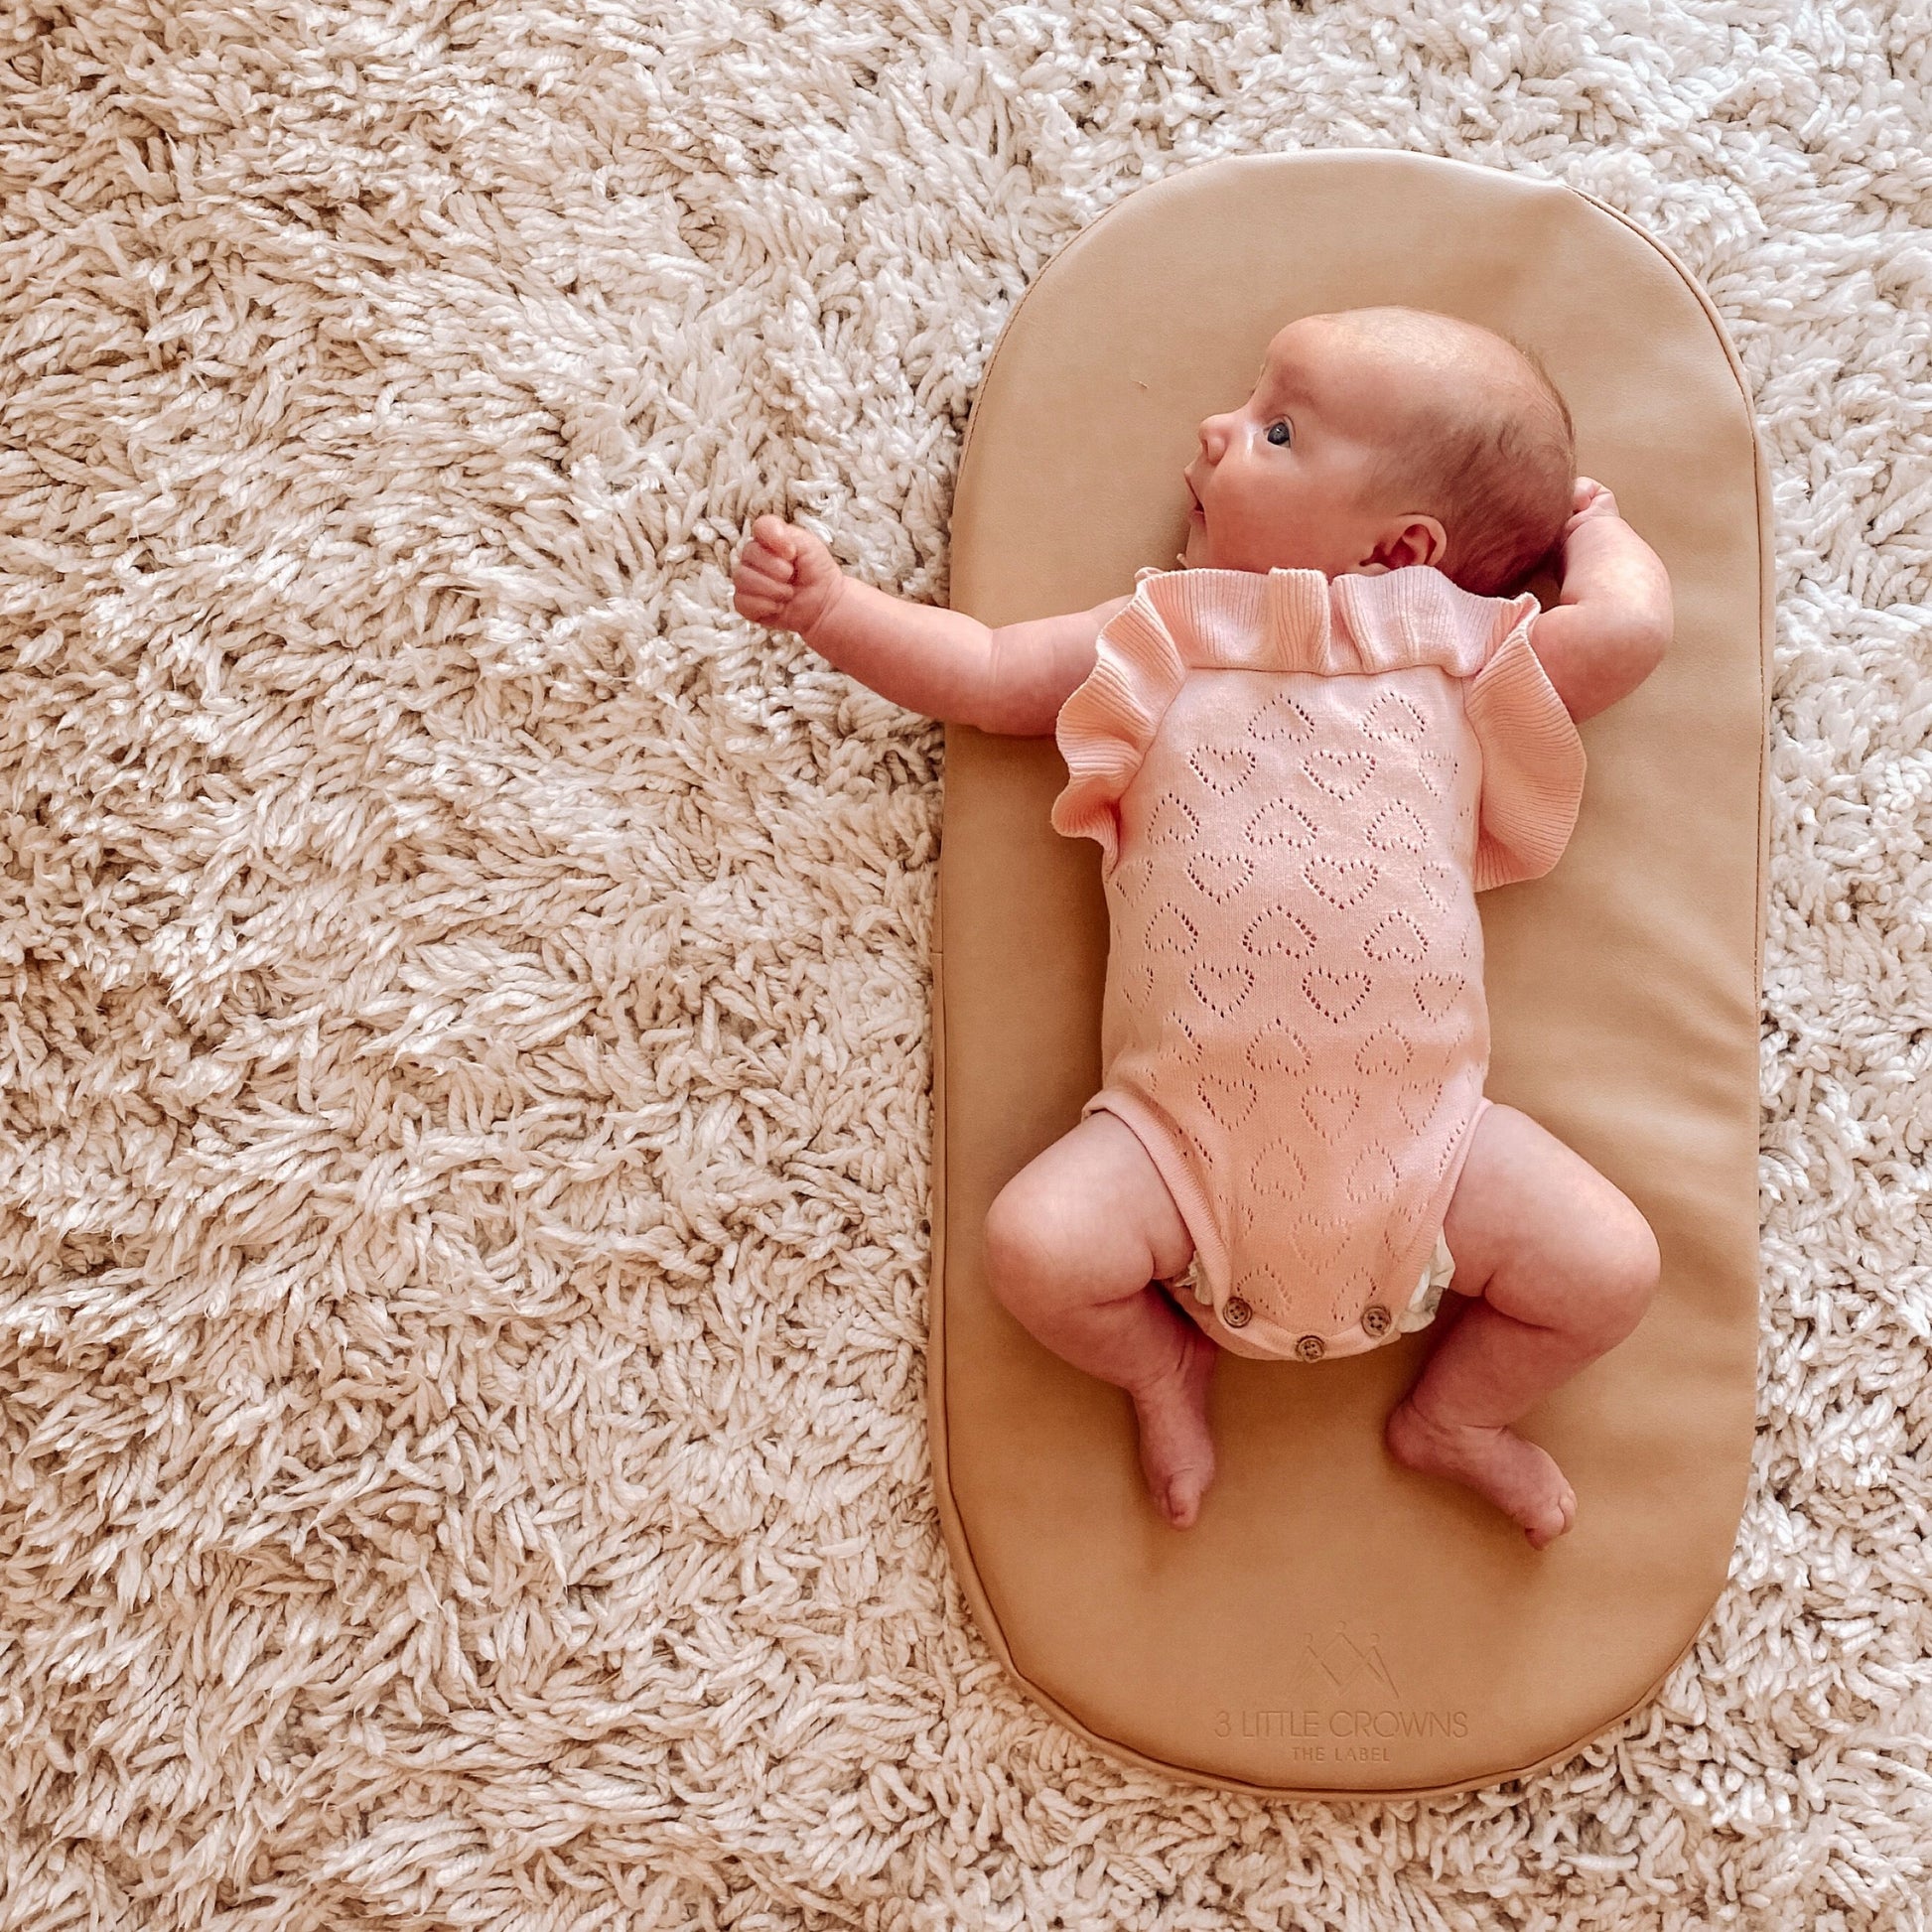 Newborn baby lying on nude vegan leather change pad on white wool carpet